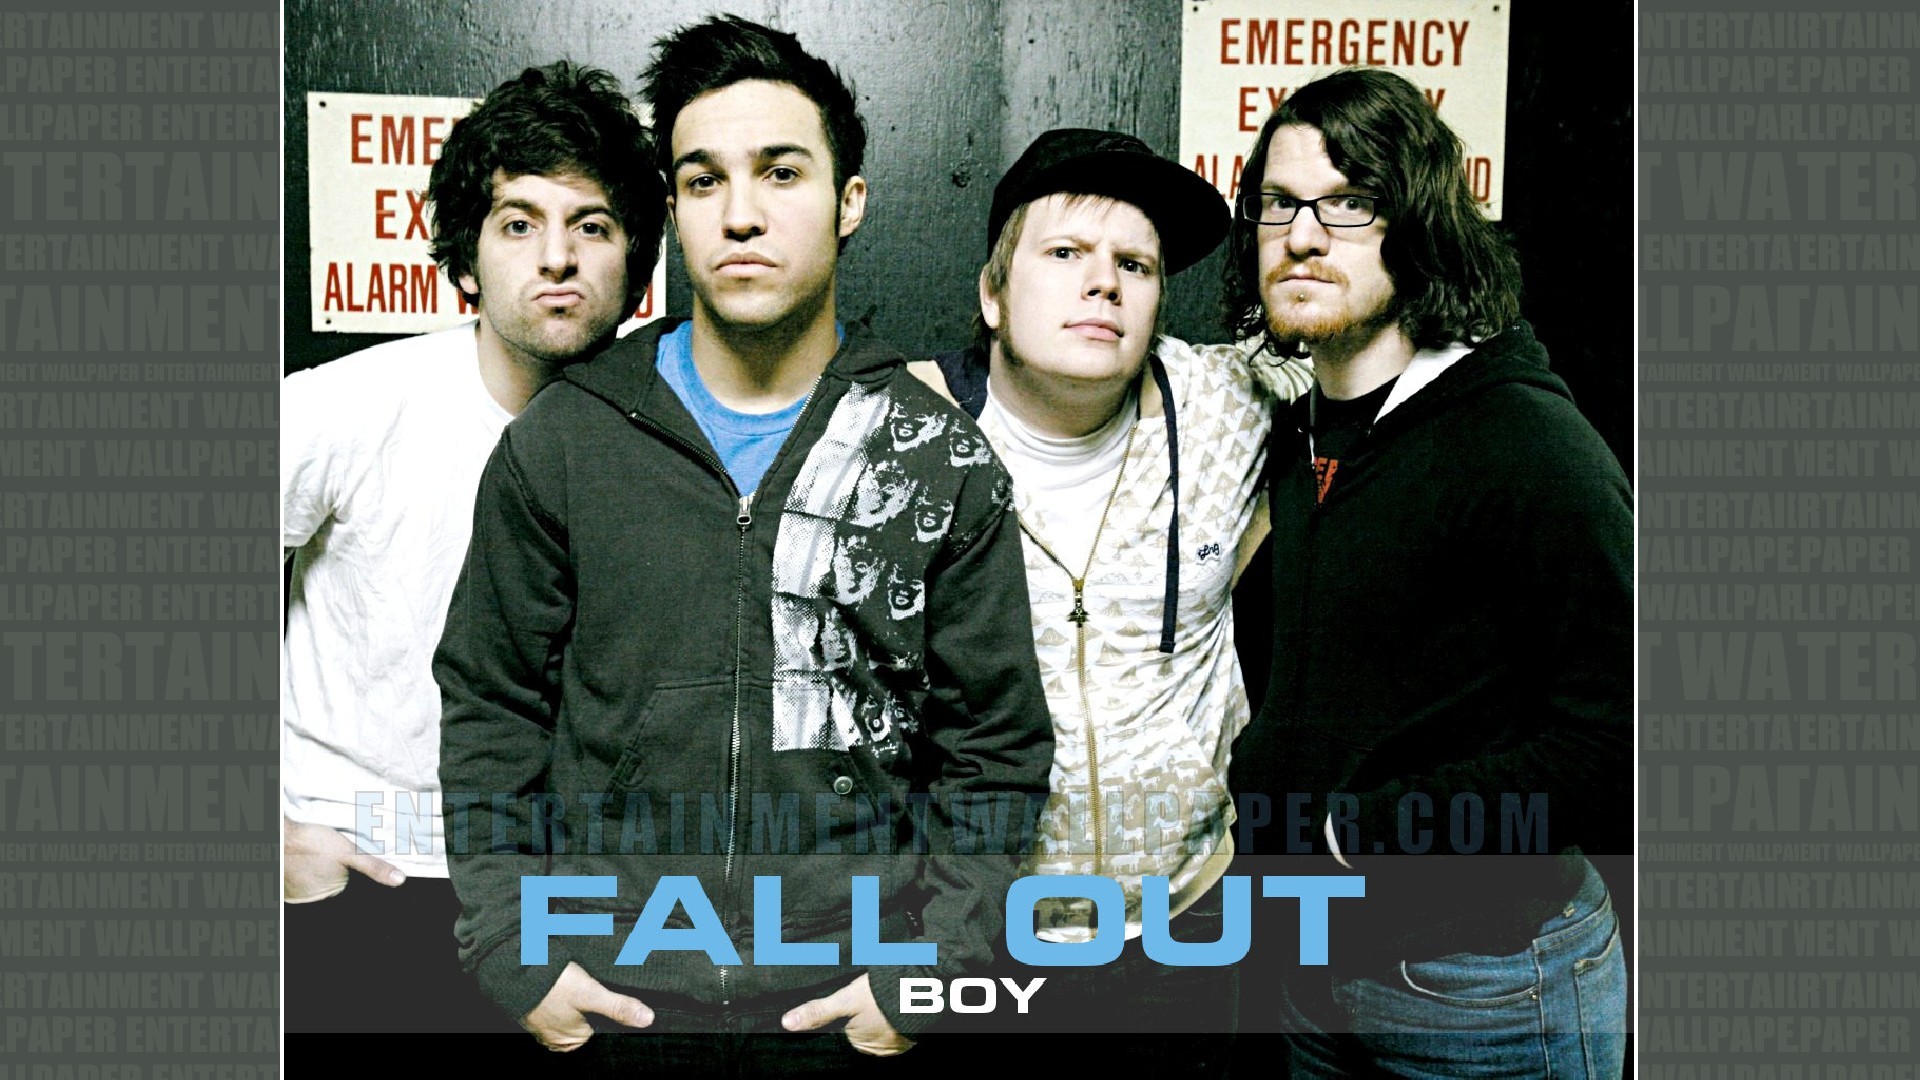 1920x1080 Fall Out Boy Wallpaper - Original size, download now.